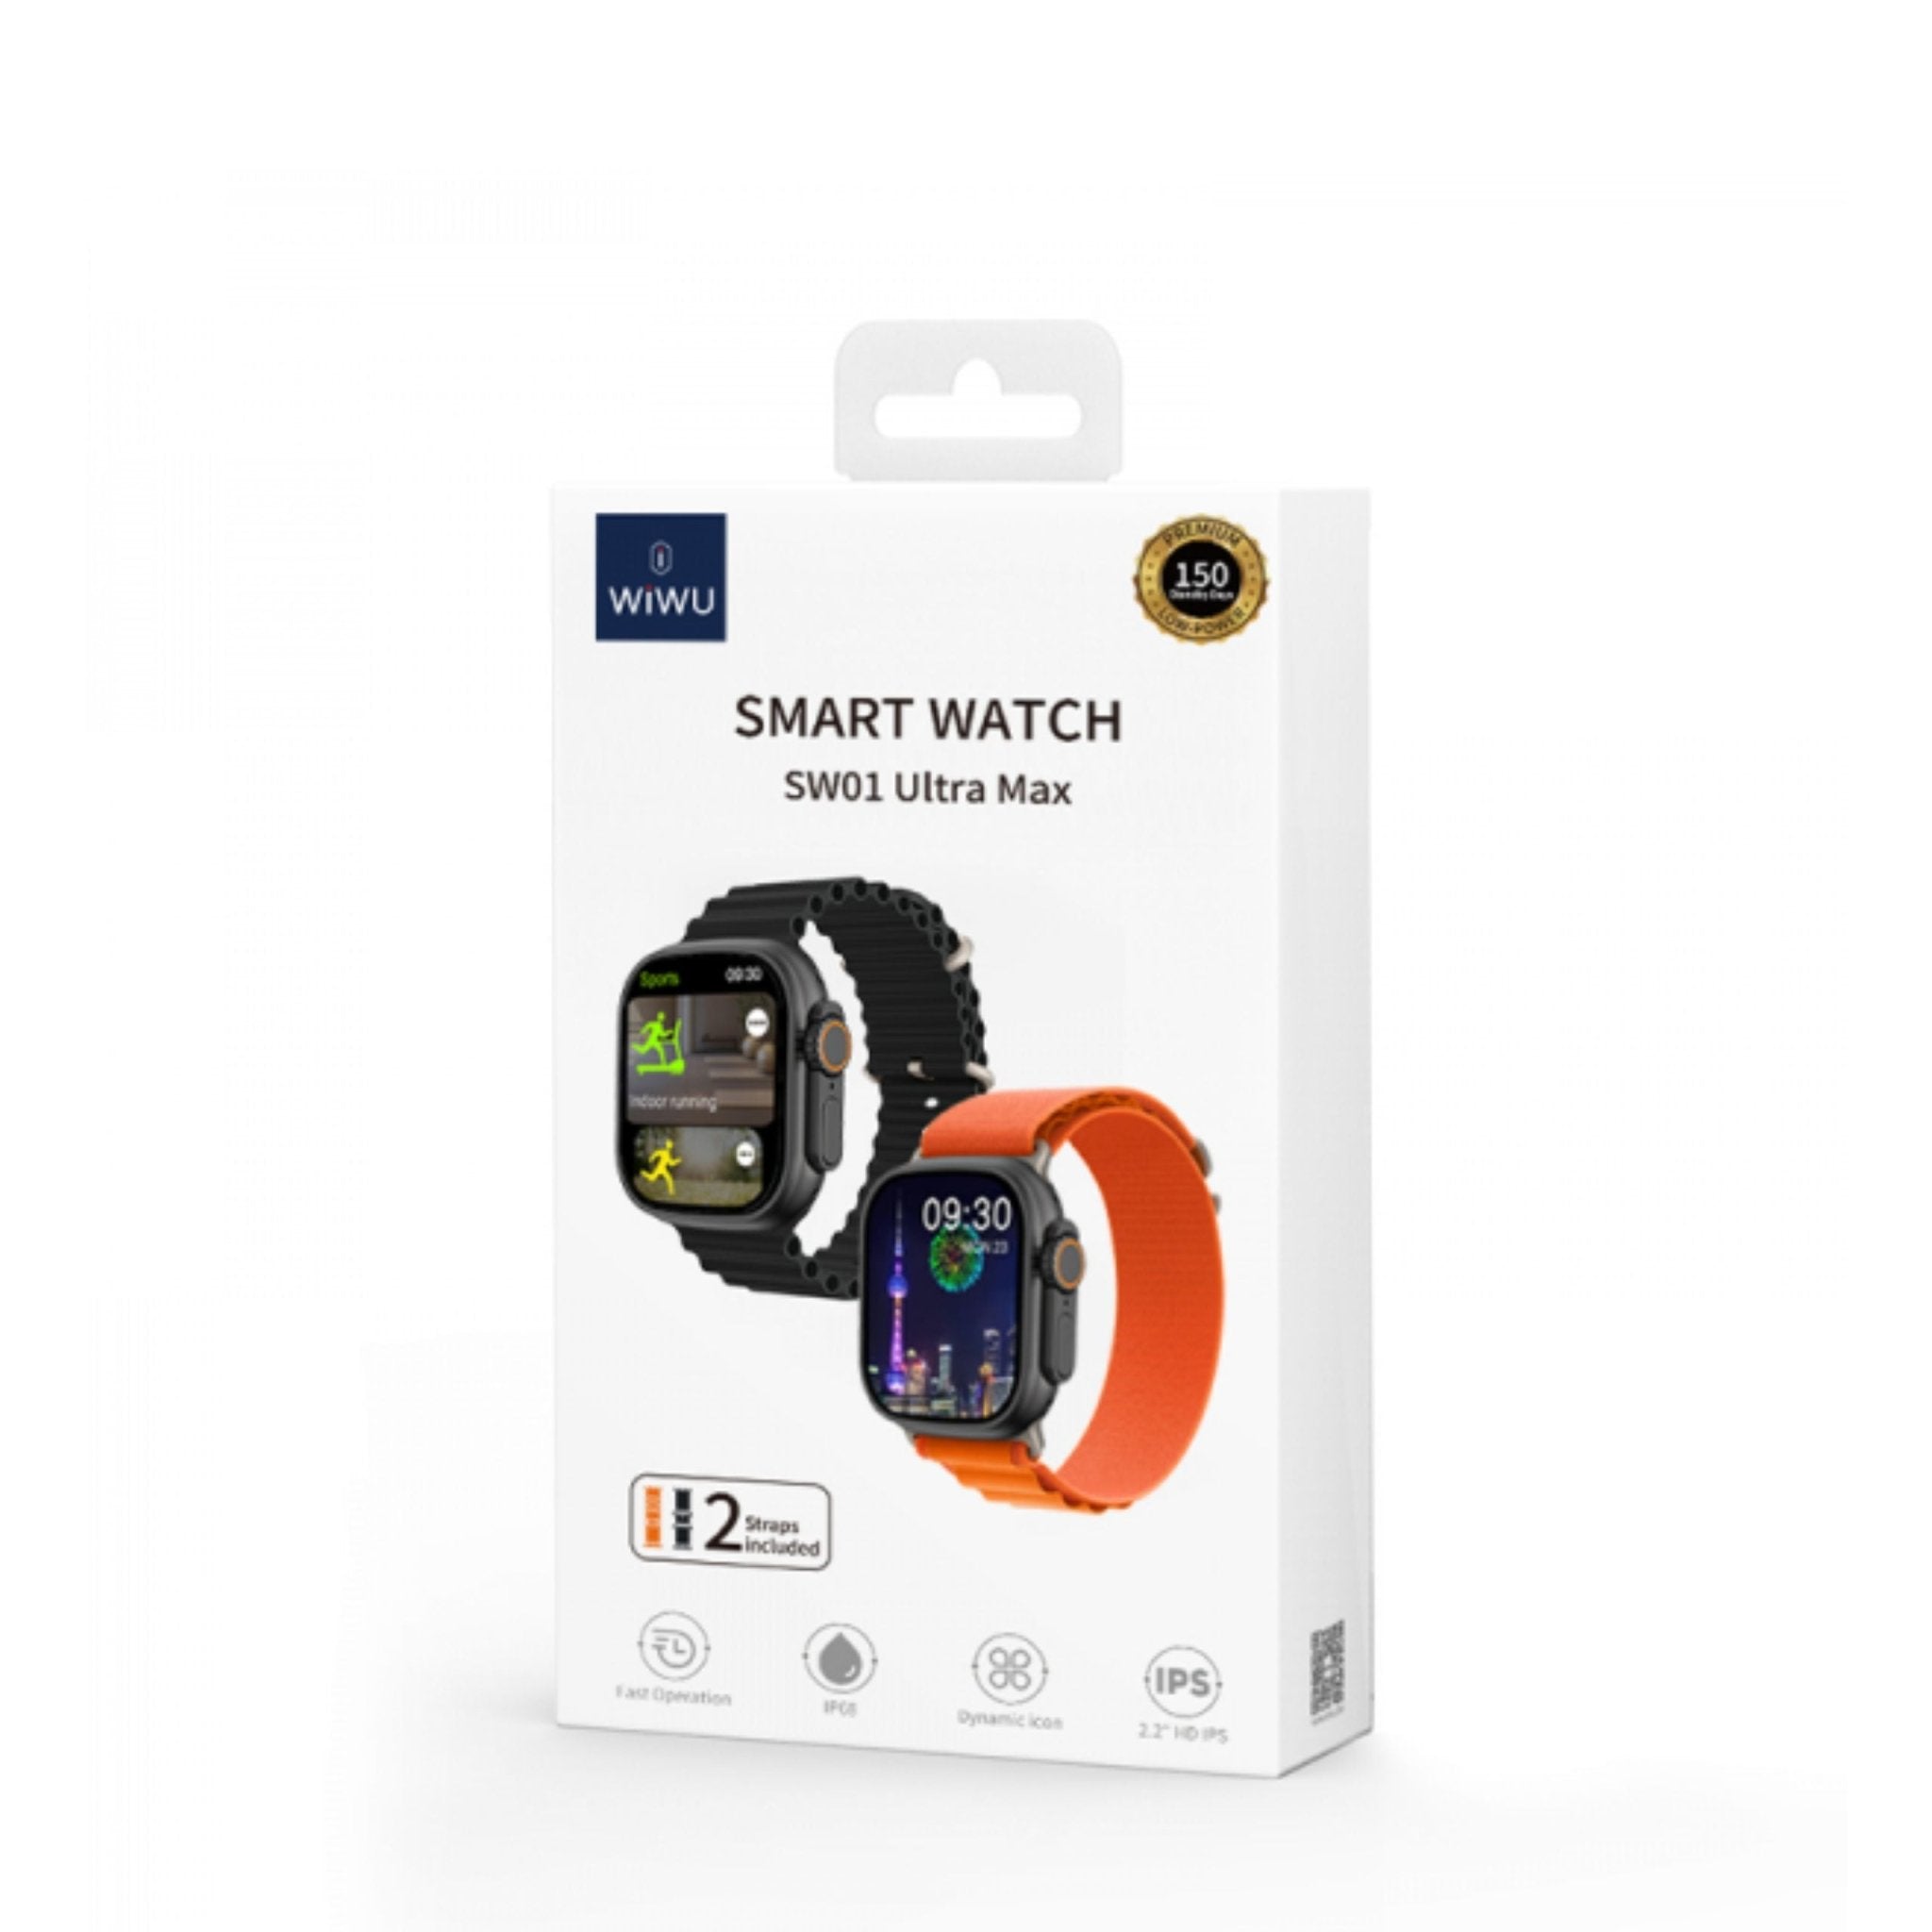 WiWU Smart Watch SW01 Ultra Max With 2 Strapes - Black